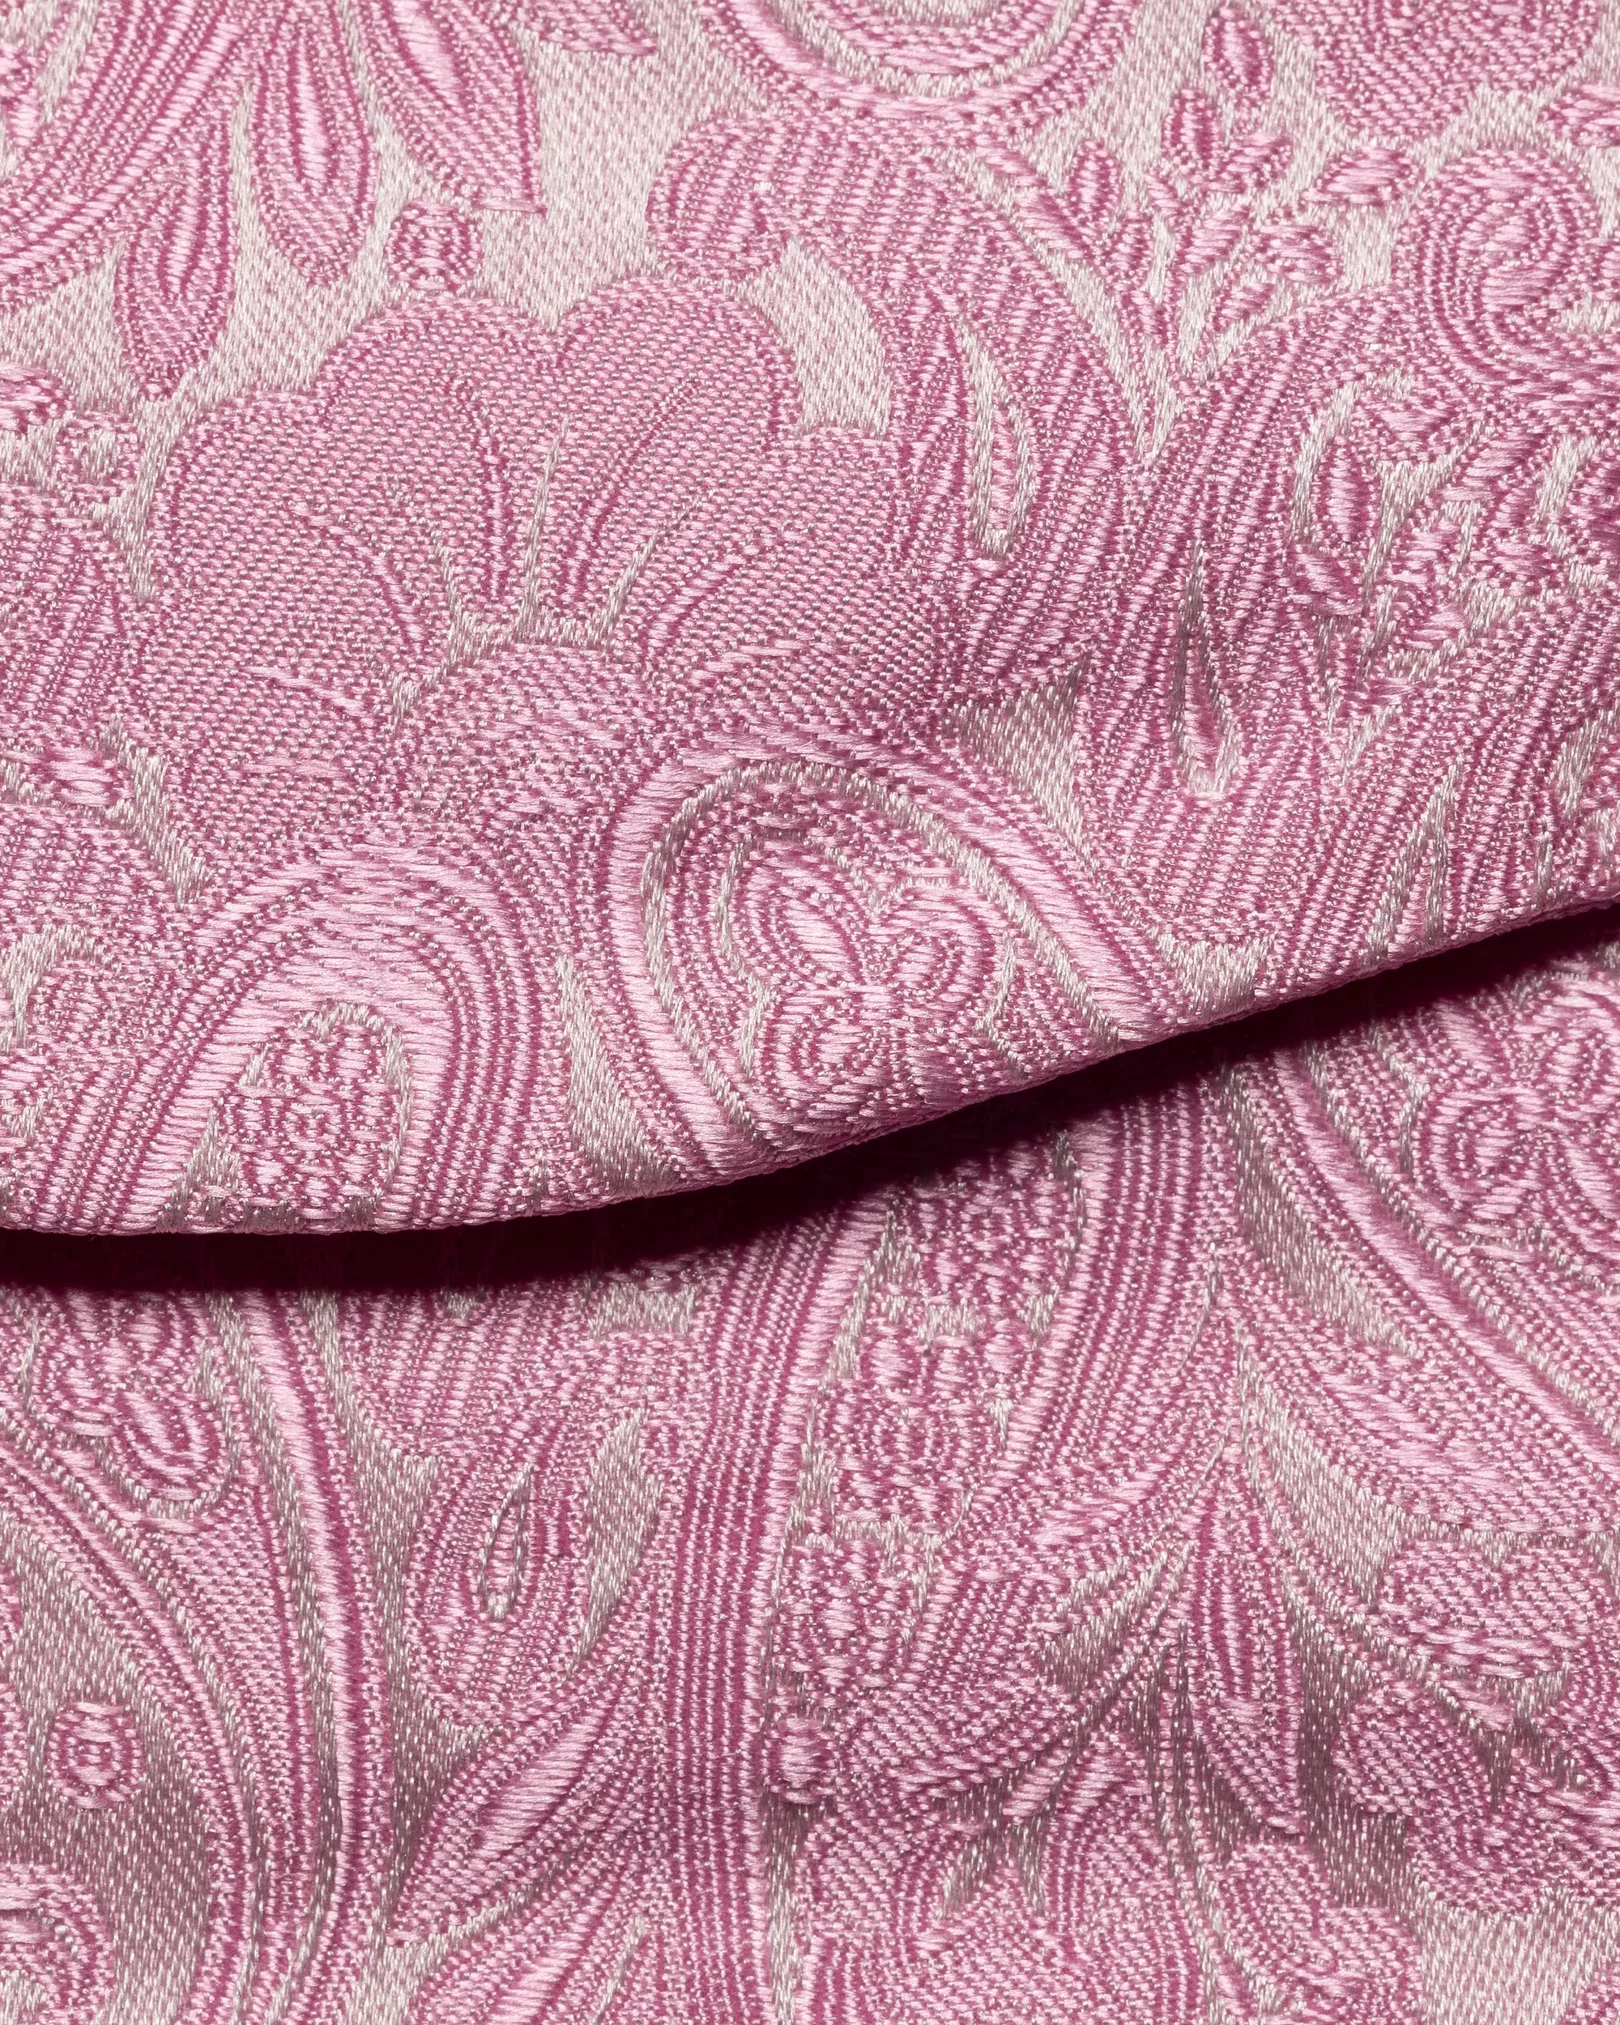 Eton - pink paisley self tied bow tie